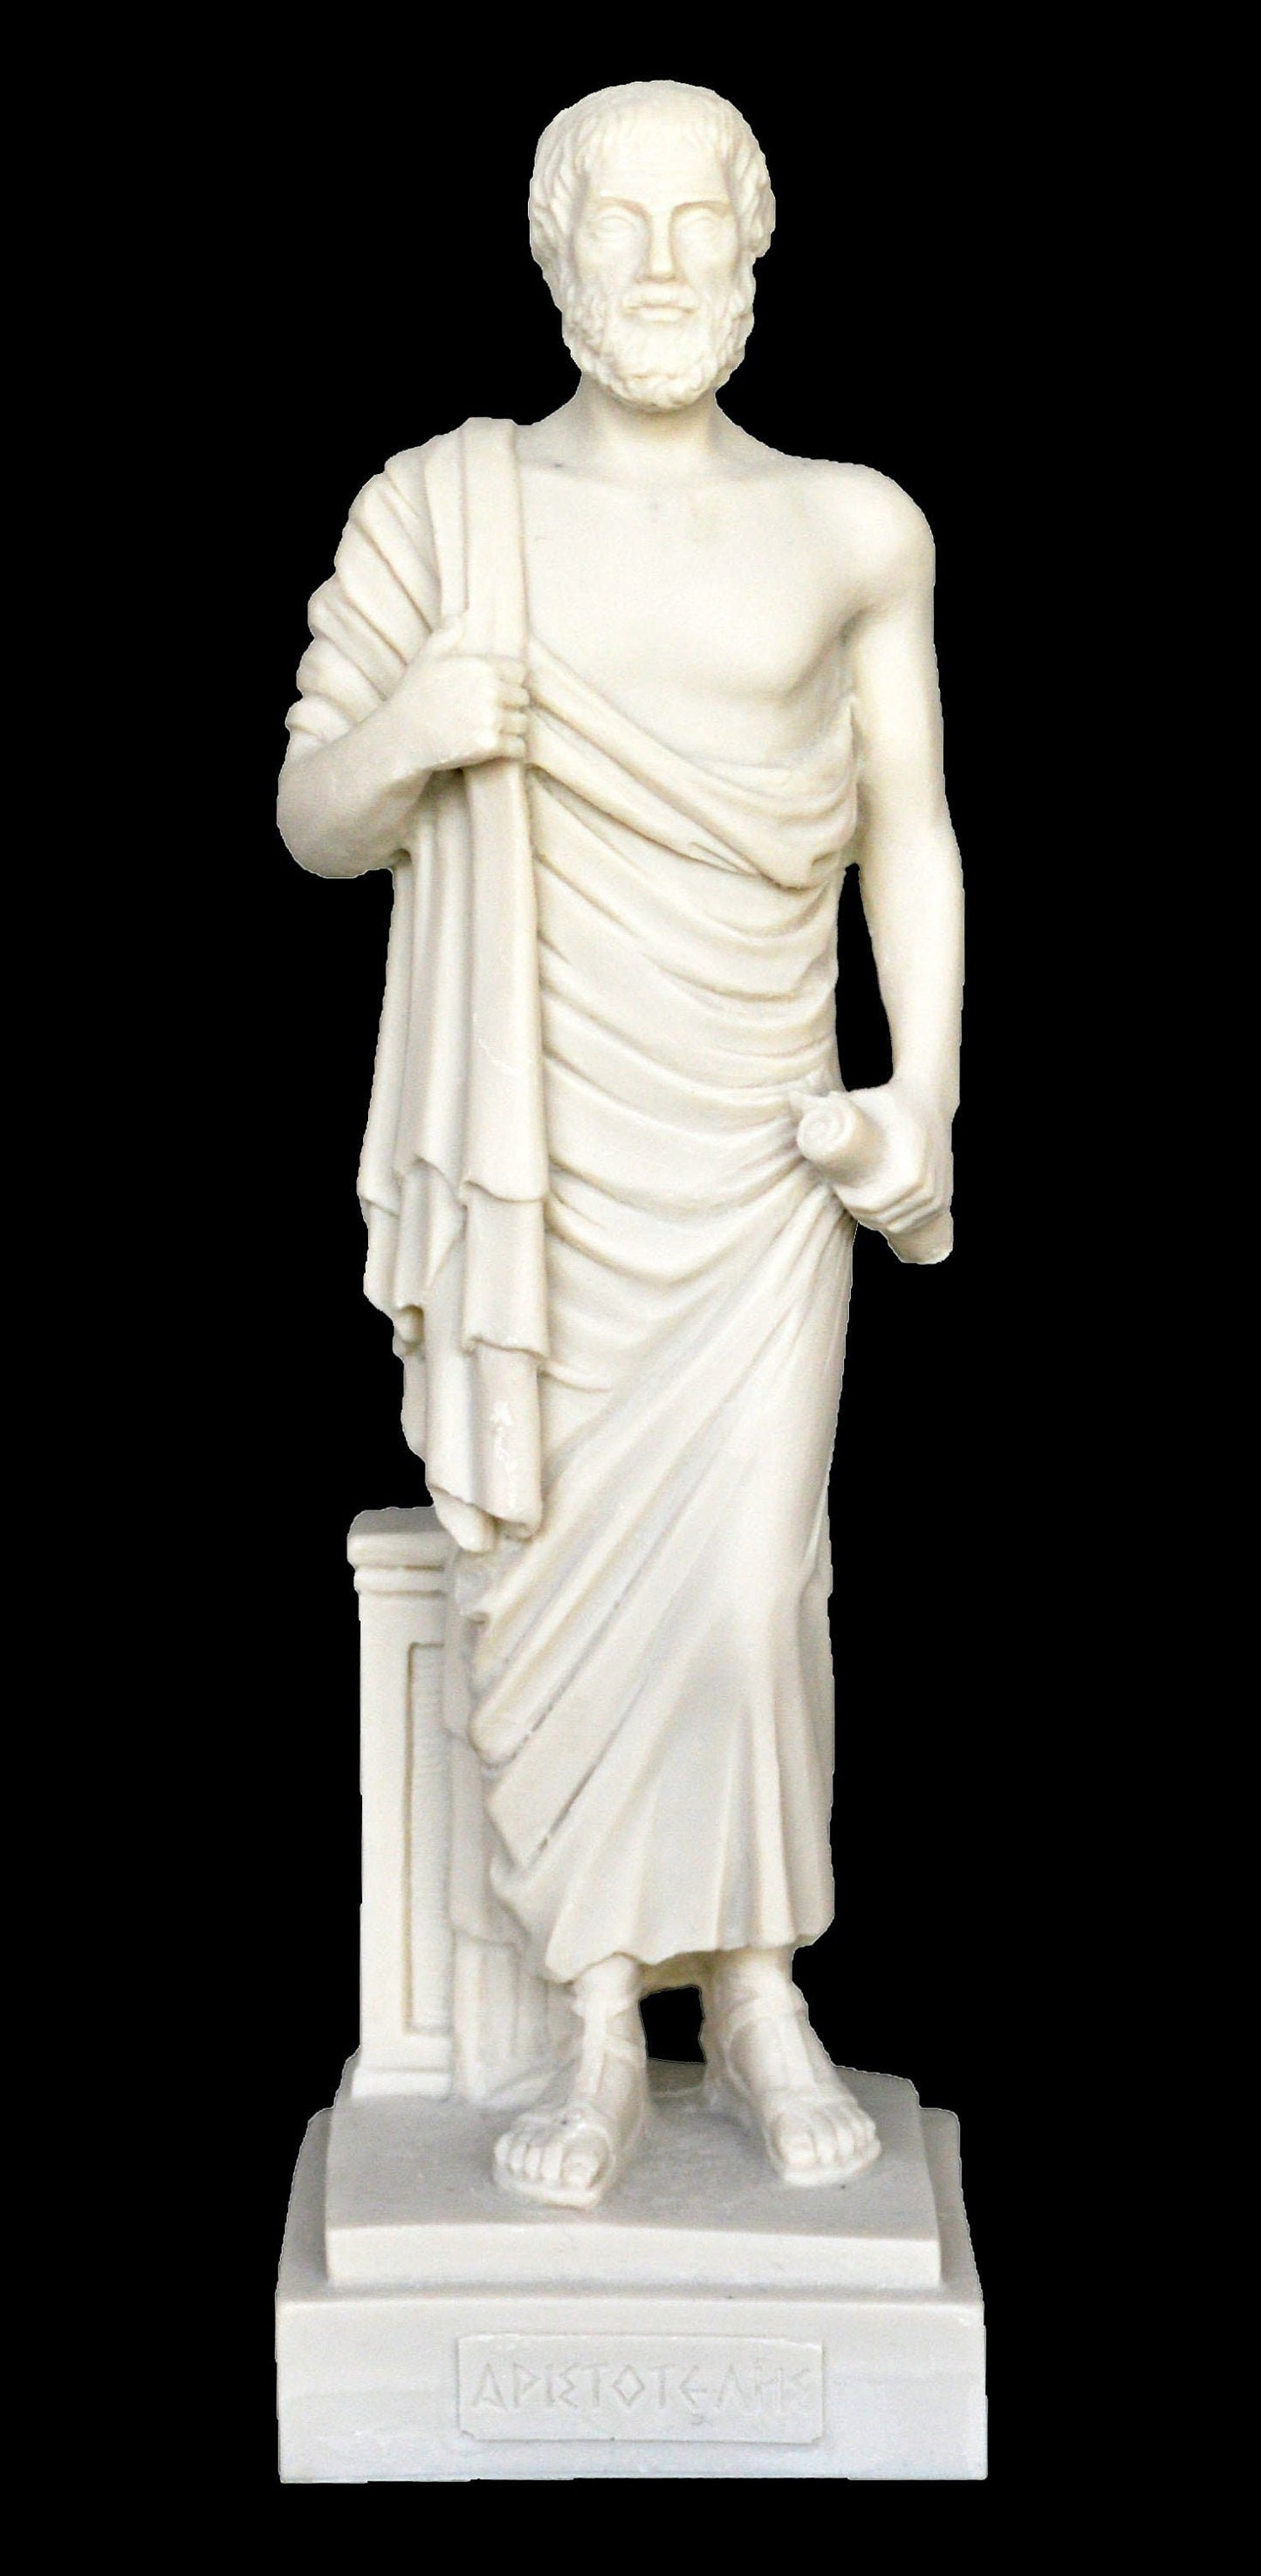 Aristotle -  Ancient Greek philosopher - 384–322 BC - Student of Plato - Teacher of Alexander the Great - alabaster statue sculpture